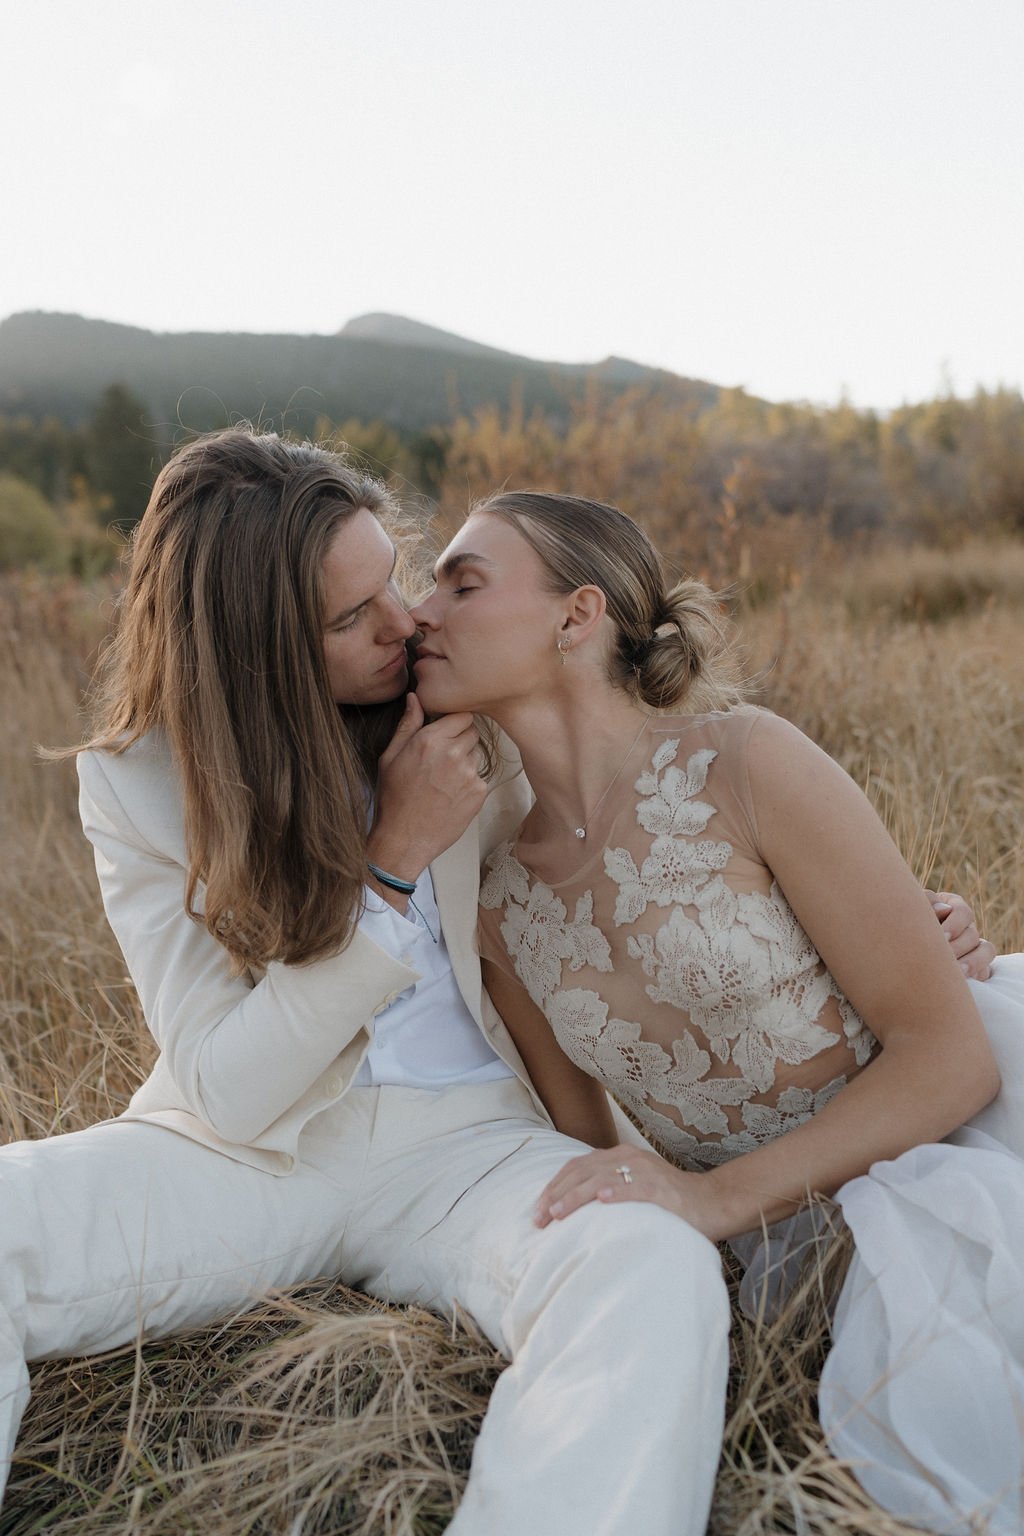 Estes Park Colorado Elopement in Linyage Elopement Wedding Dress